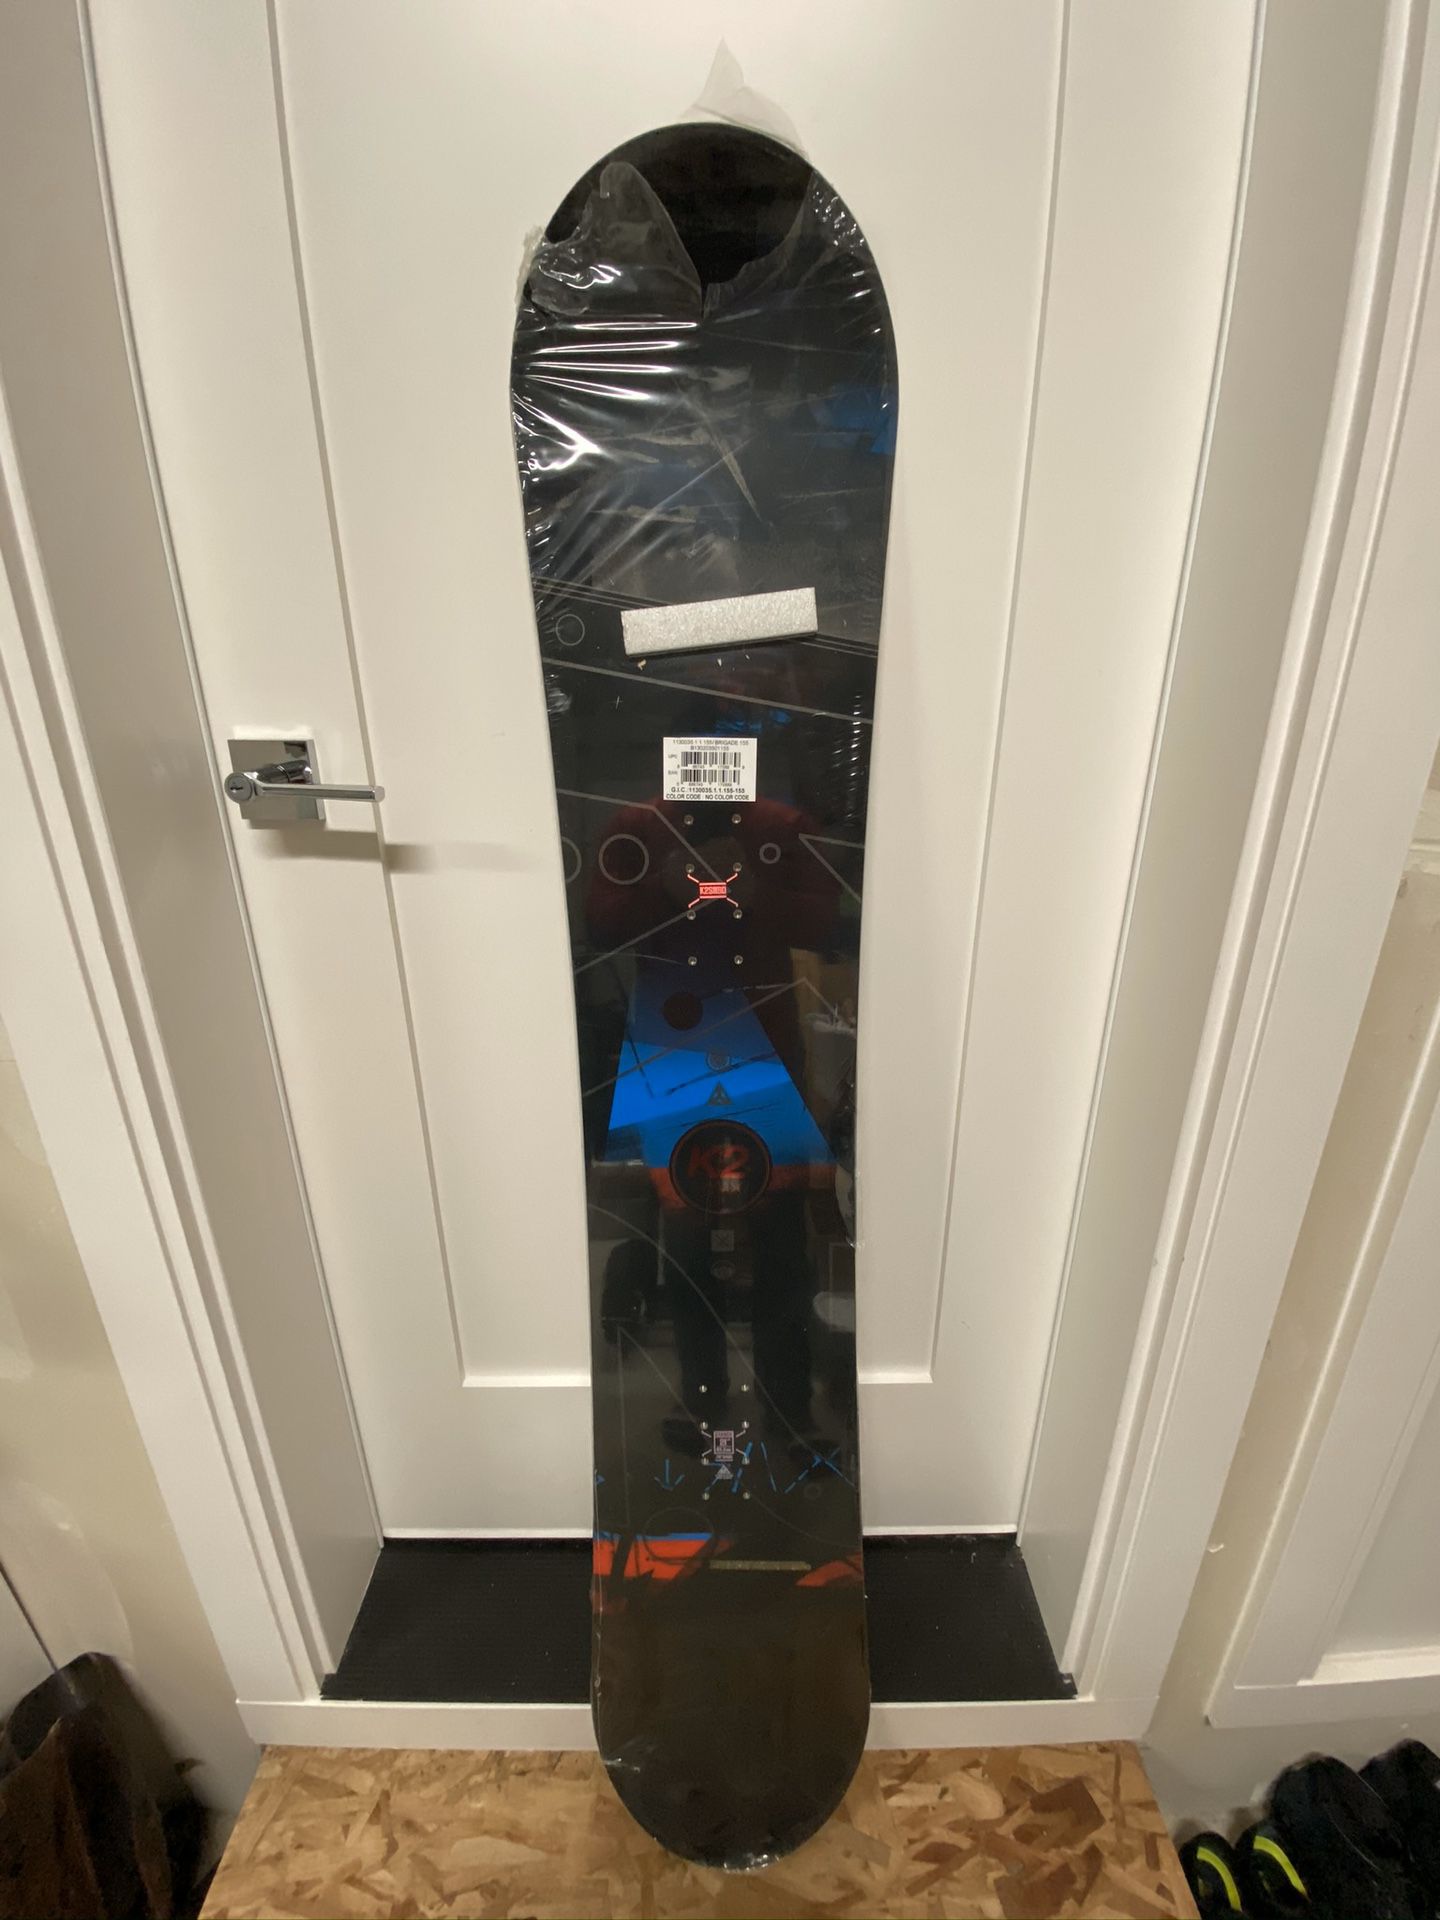 K2 Brigade Snowboard - 155 - new in plastic wrap